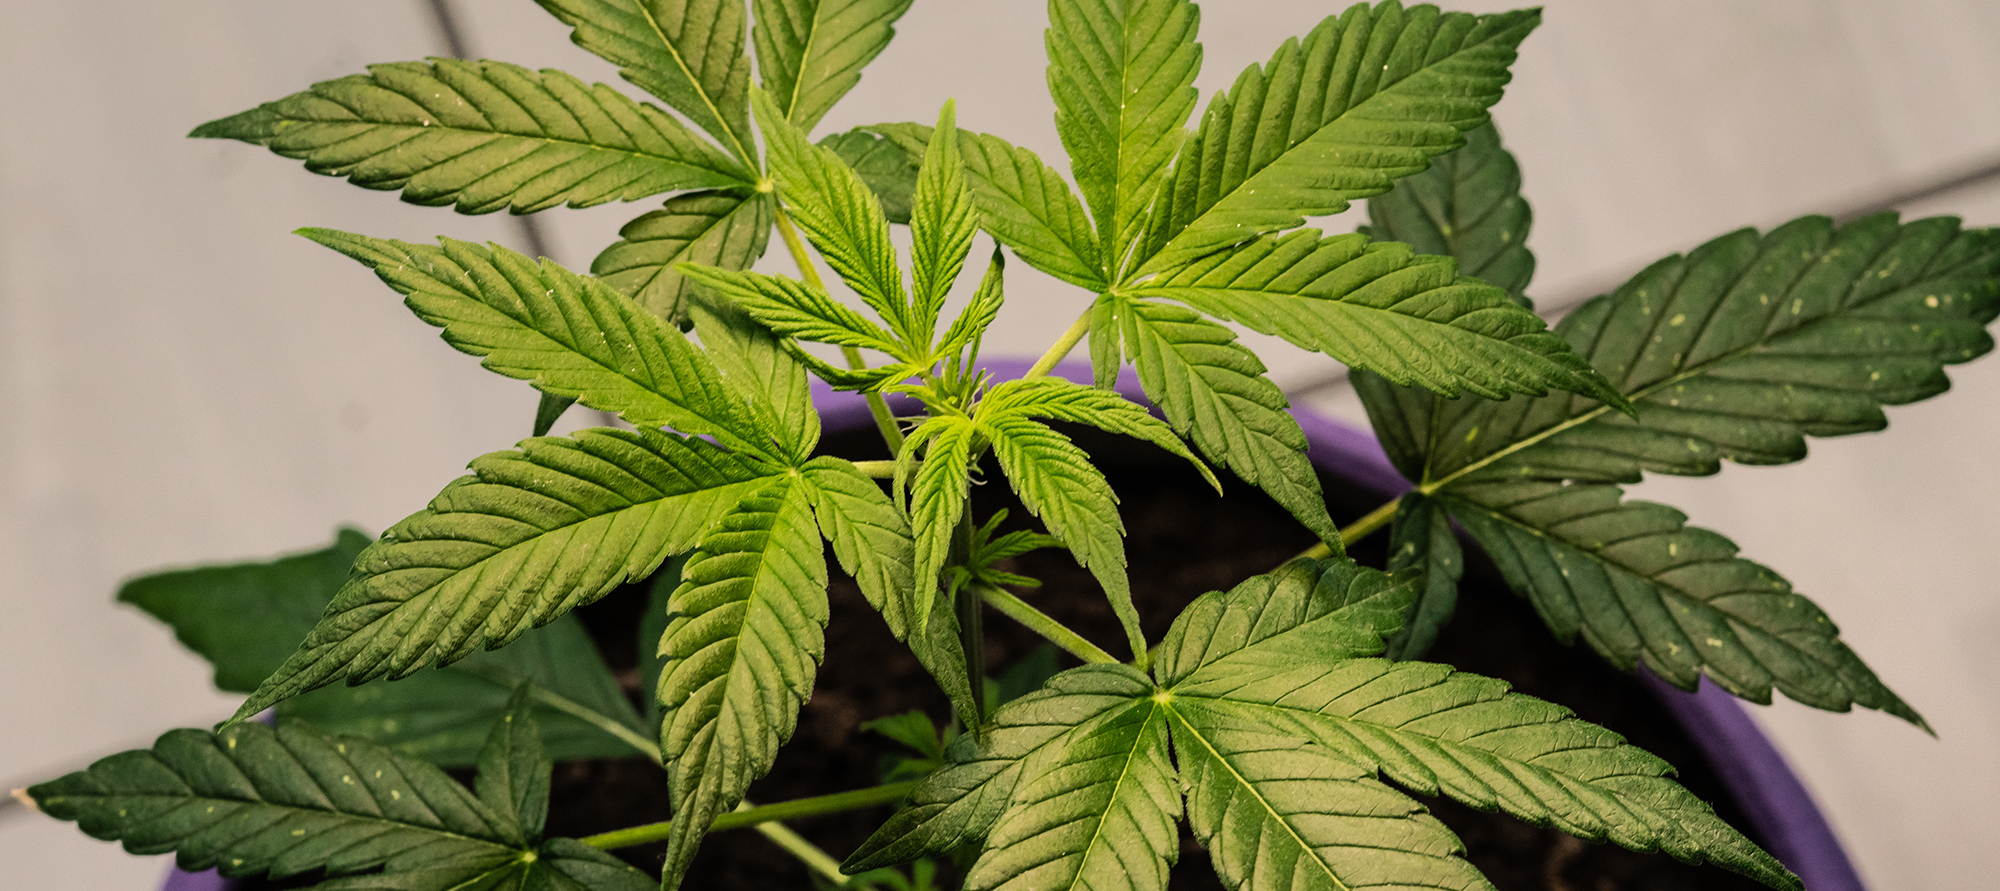 Cannabis vegetative phase (3-15 weeks)